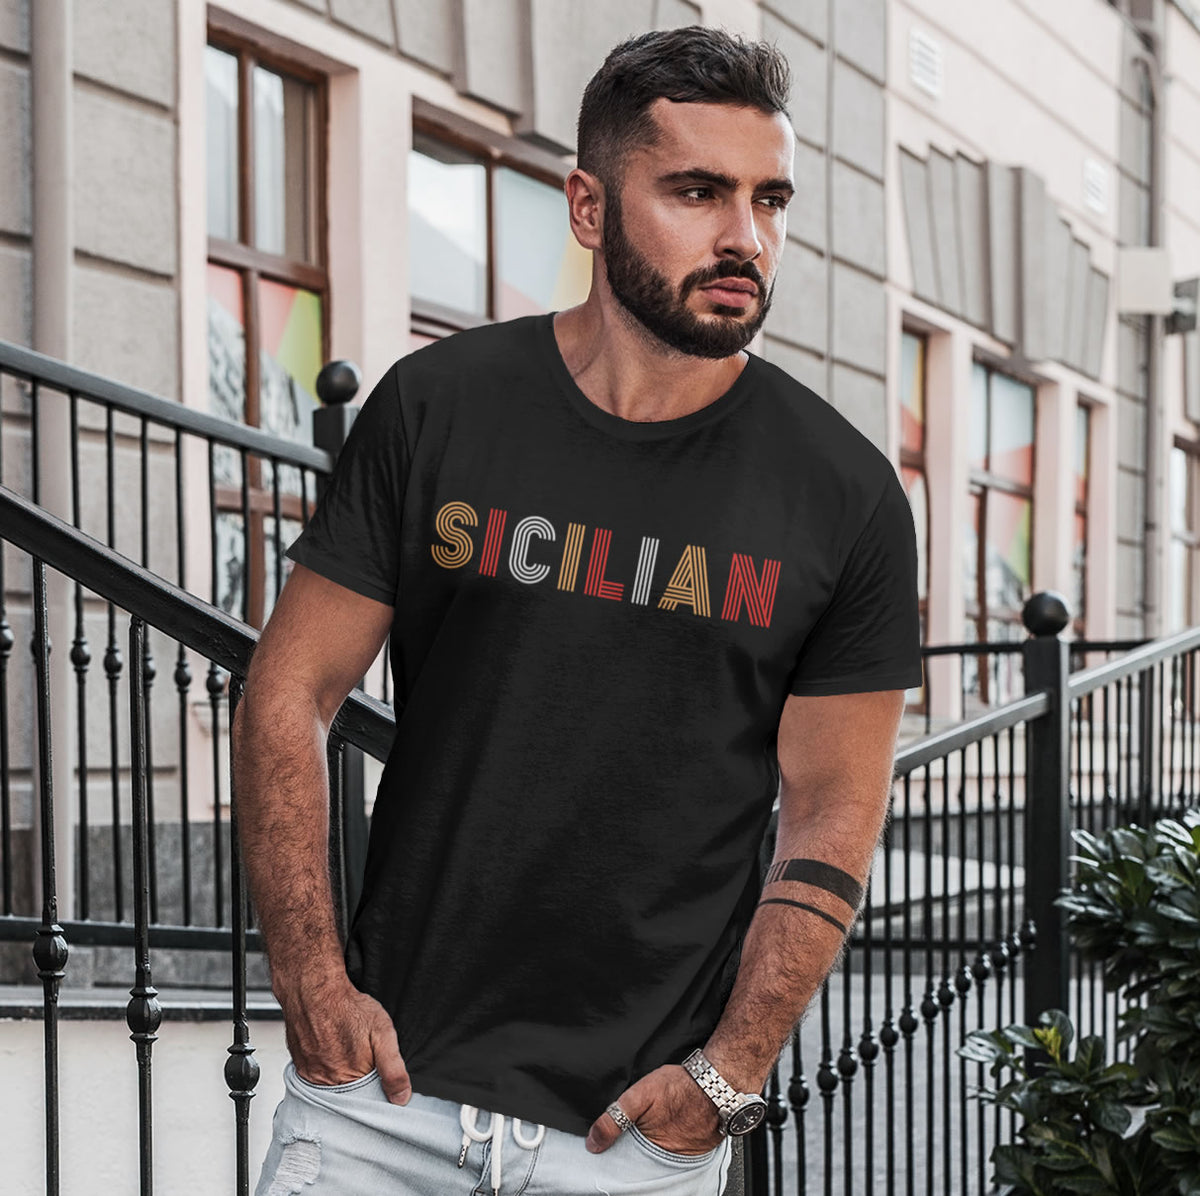 Sicilian Italian Heritage T-shirt | Heather Dark Grey Unisex Jersey T-shirt